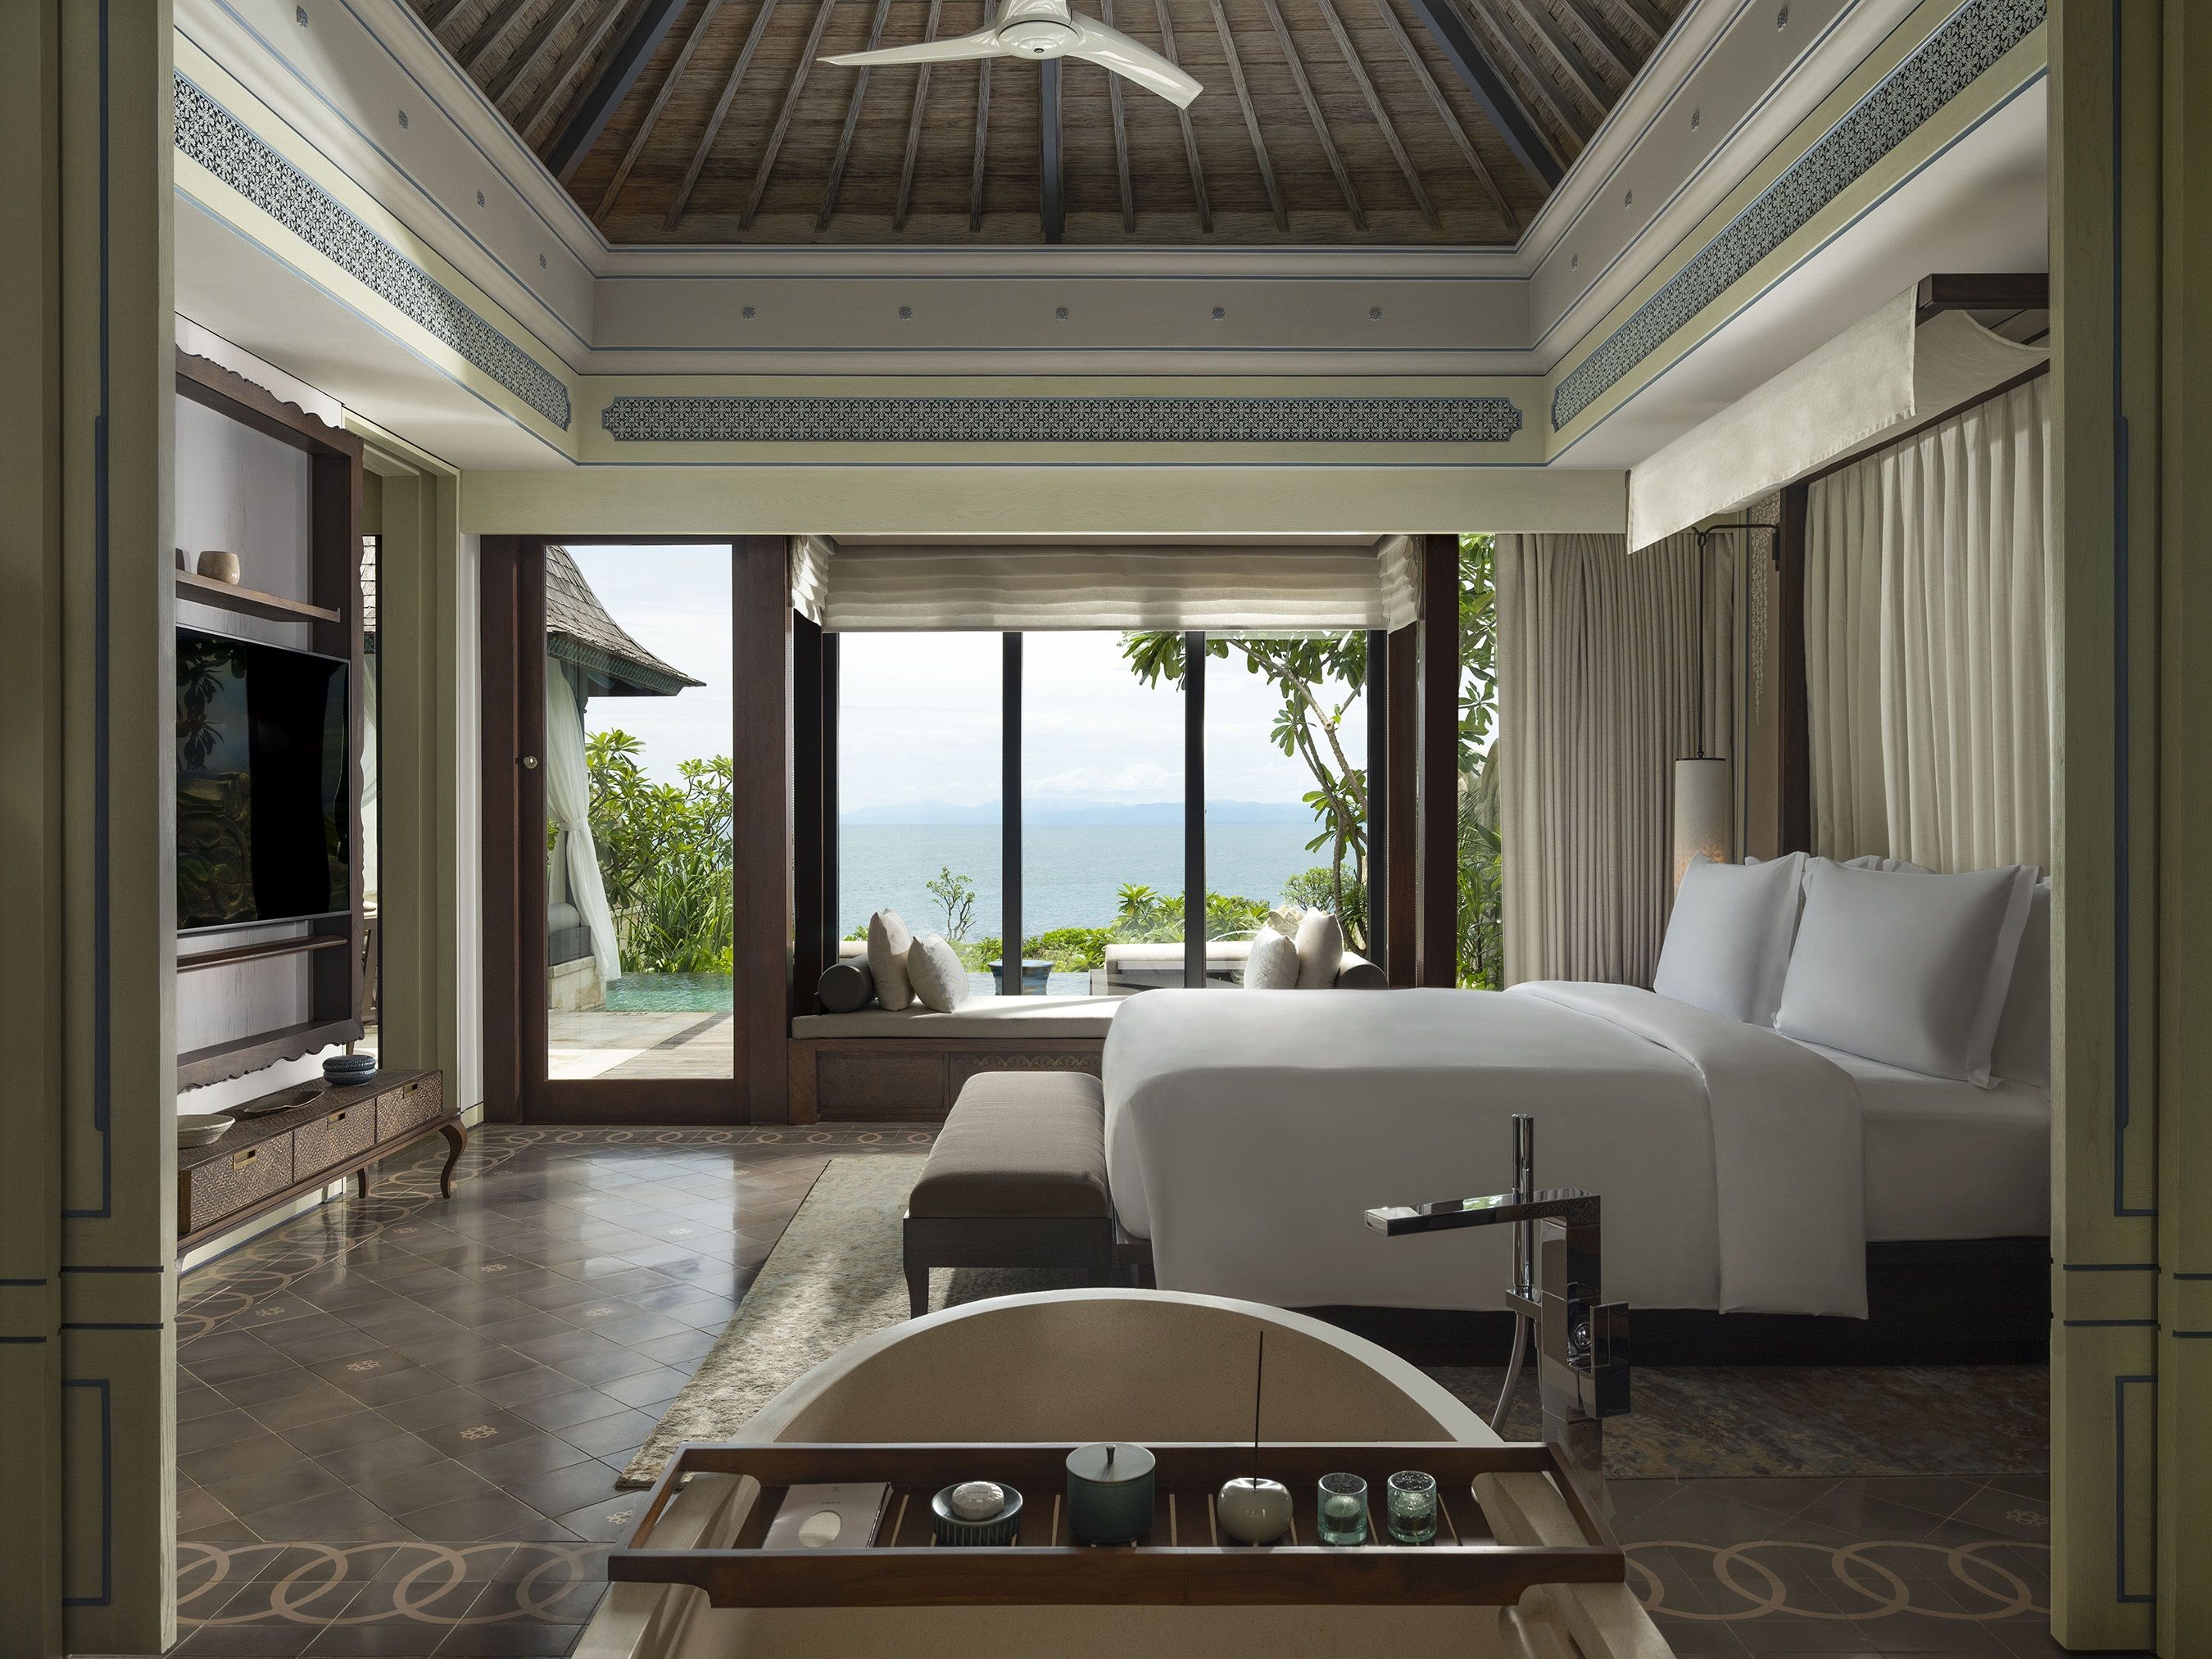 Jumeirah Bali memiliki 123 villa dengan konfigurasi satu kamar tidur dan dua kamar tidur, serta Royal Water Palace dengan empat kamar tidur, yang menampilkan pemandangan tropis Samudra Hindia yang memukau dan keindahan alam hijau Bali yang memesona/Jumairahgroup/